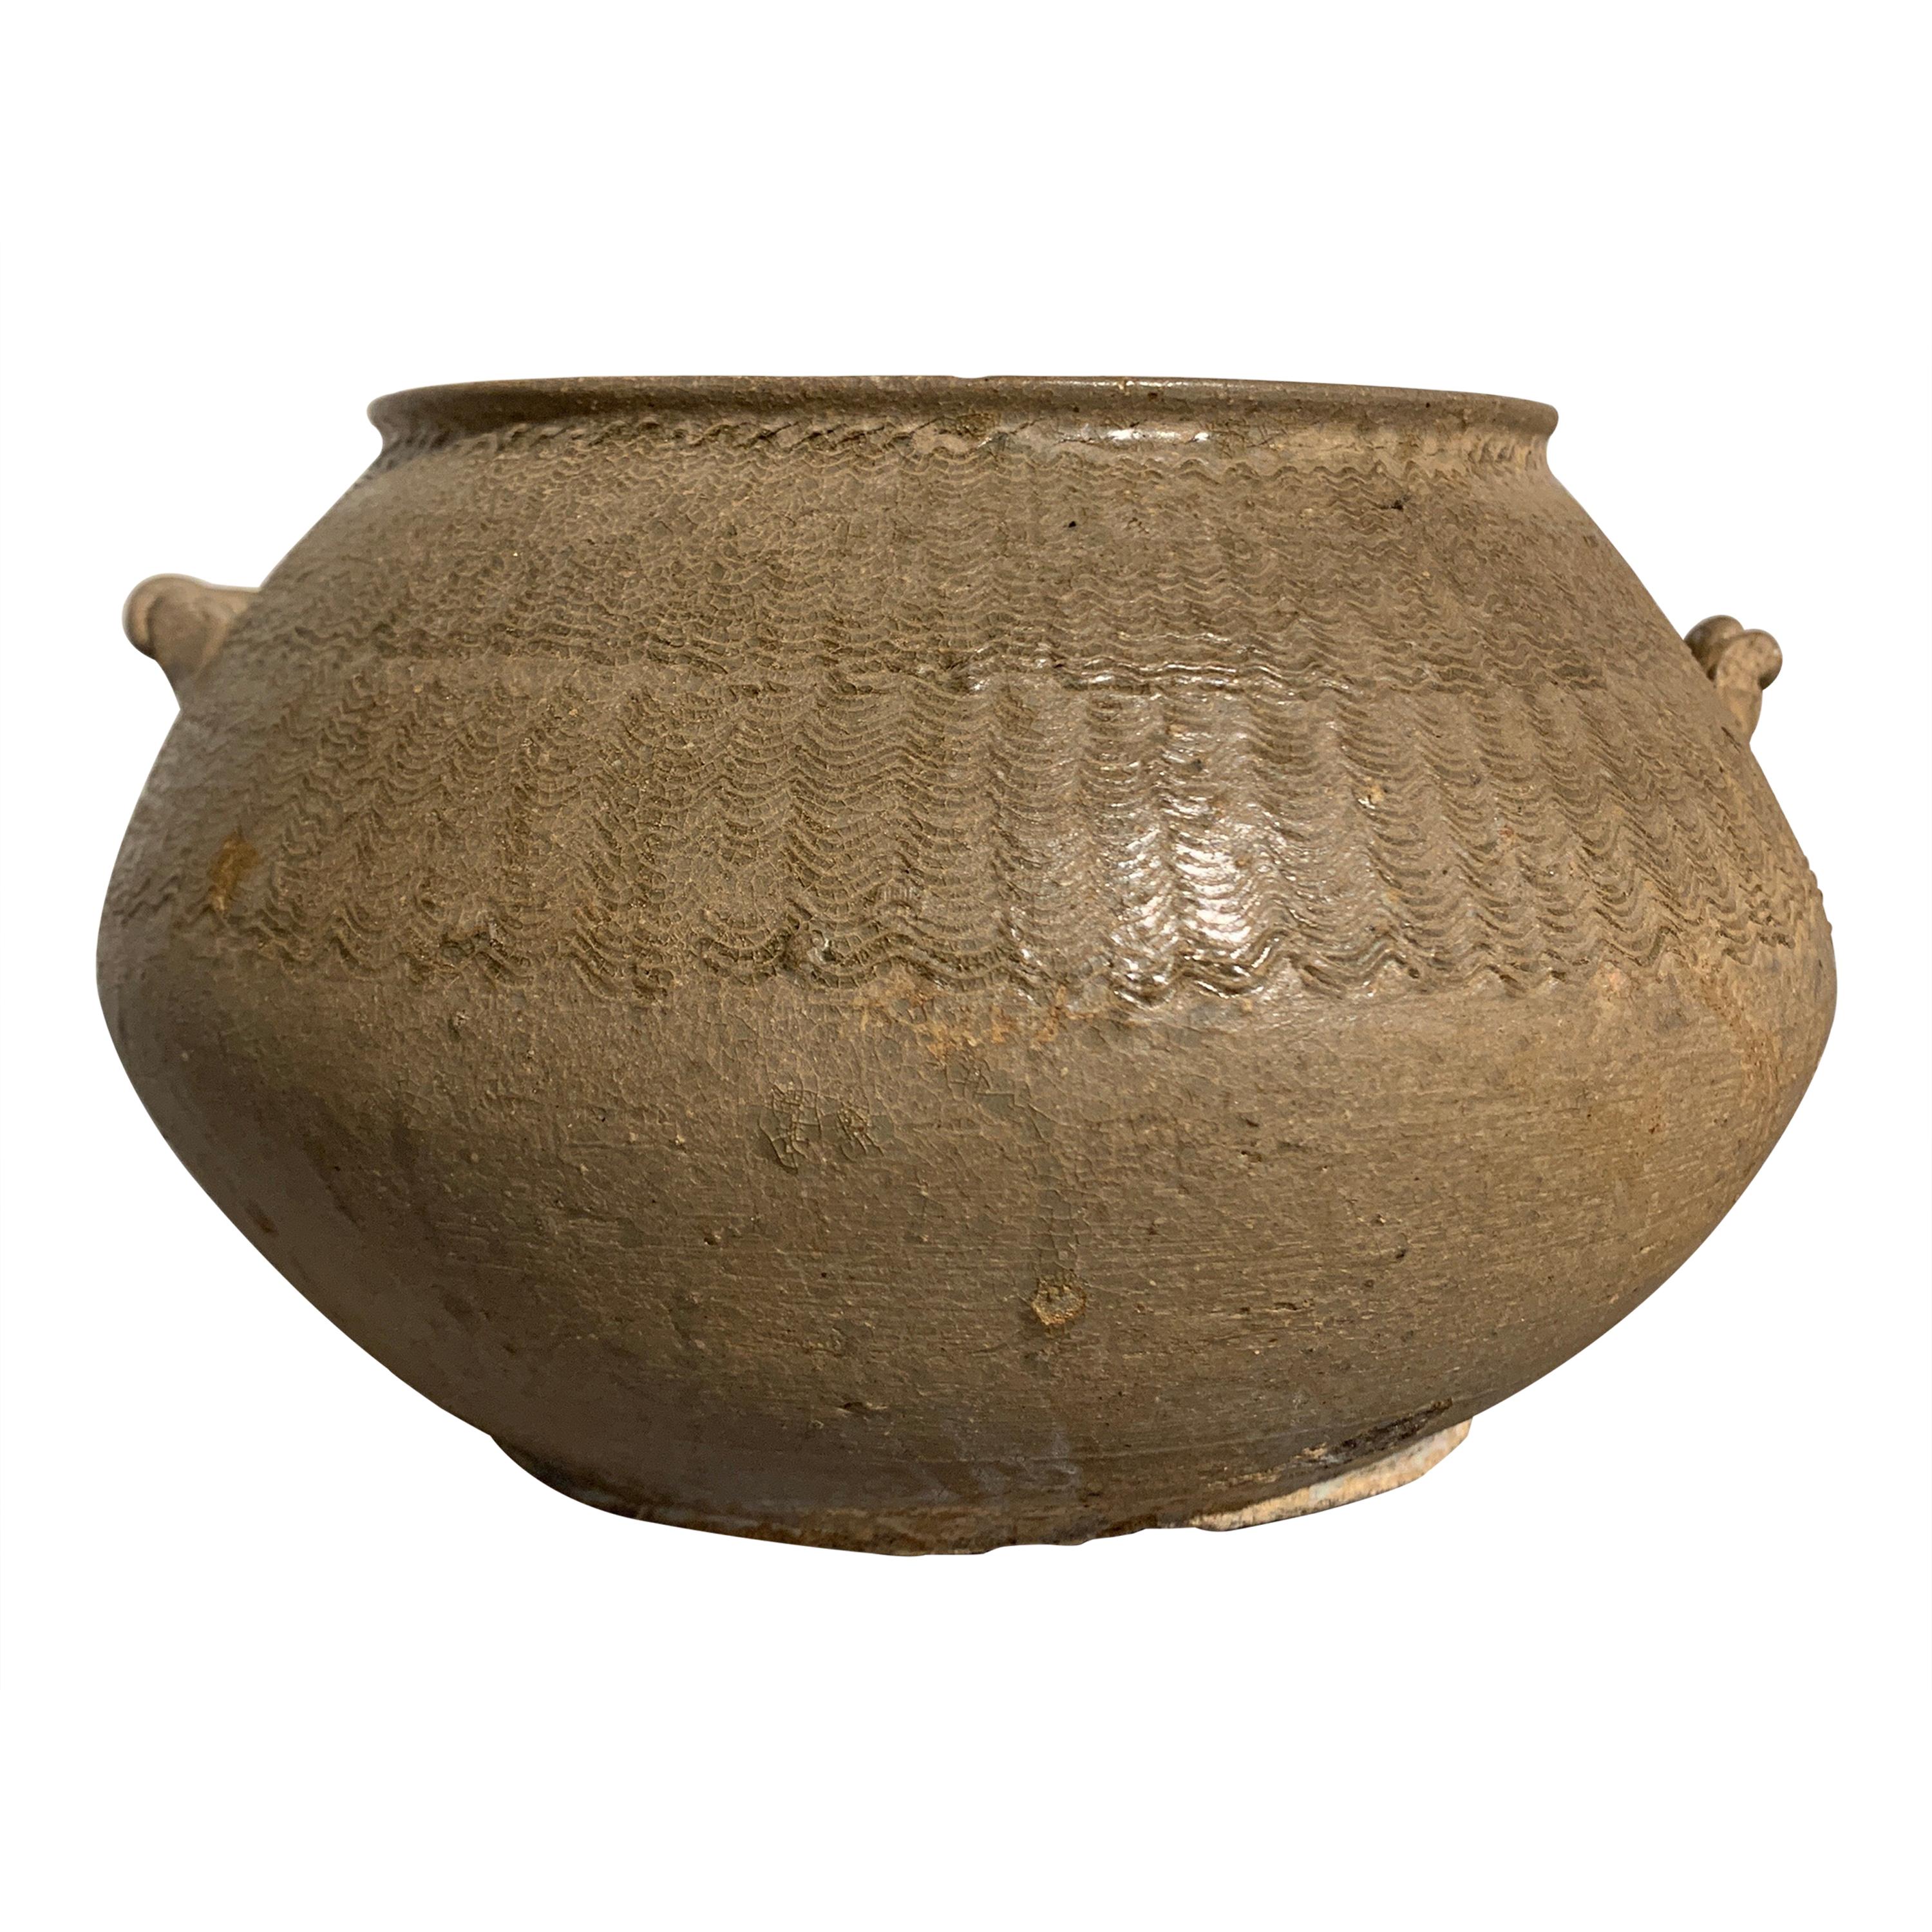 Chinese Yueyao Celadon Glazed Jar 'Guan', Five Dynasties, 10th Century